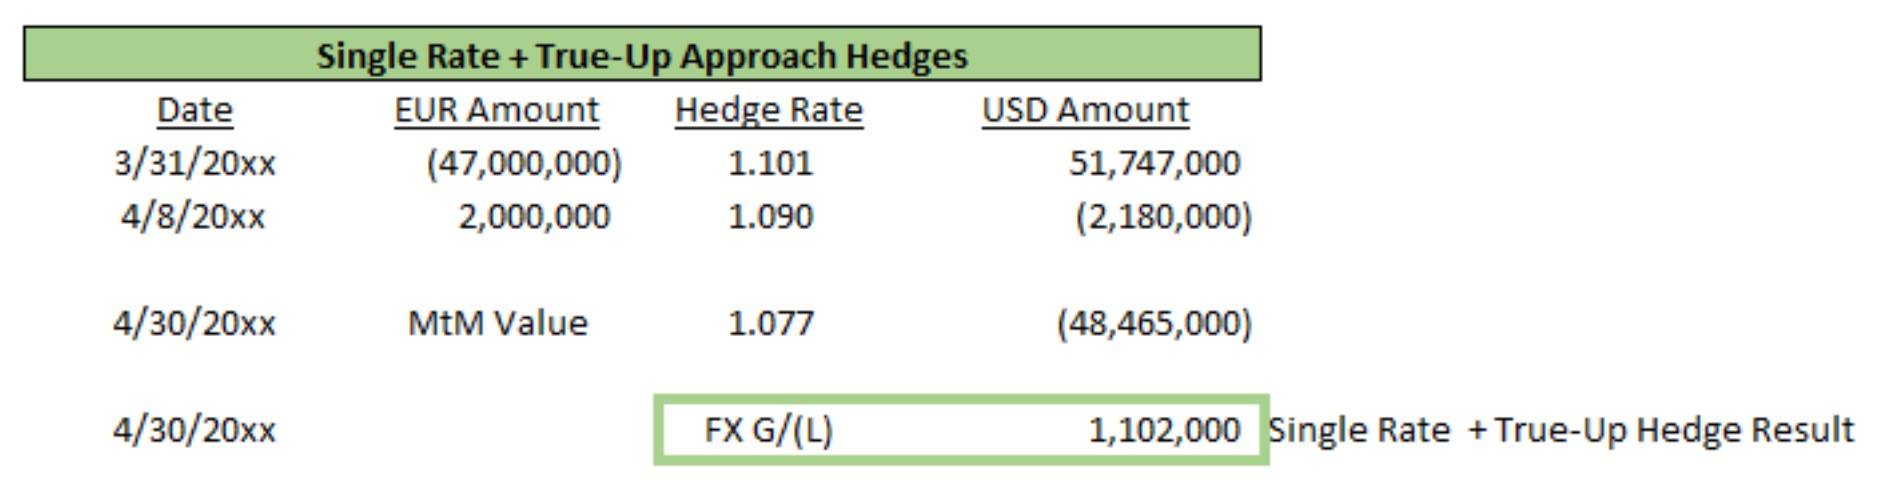 Single Rate Hedges + True-Up Hedge